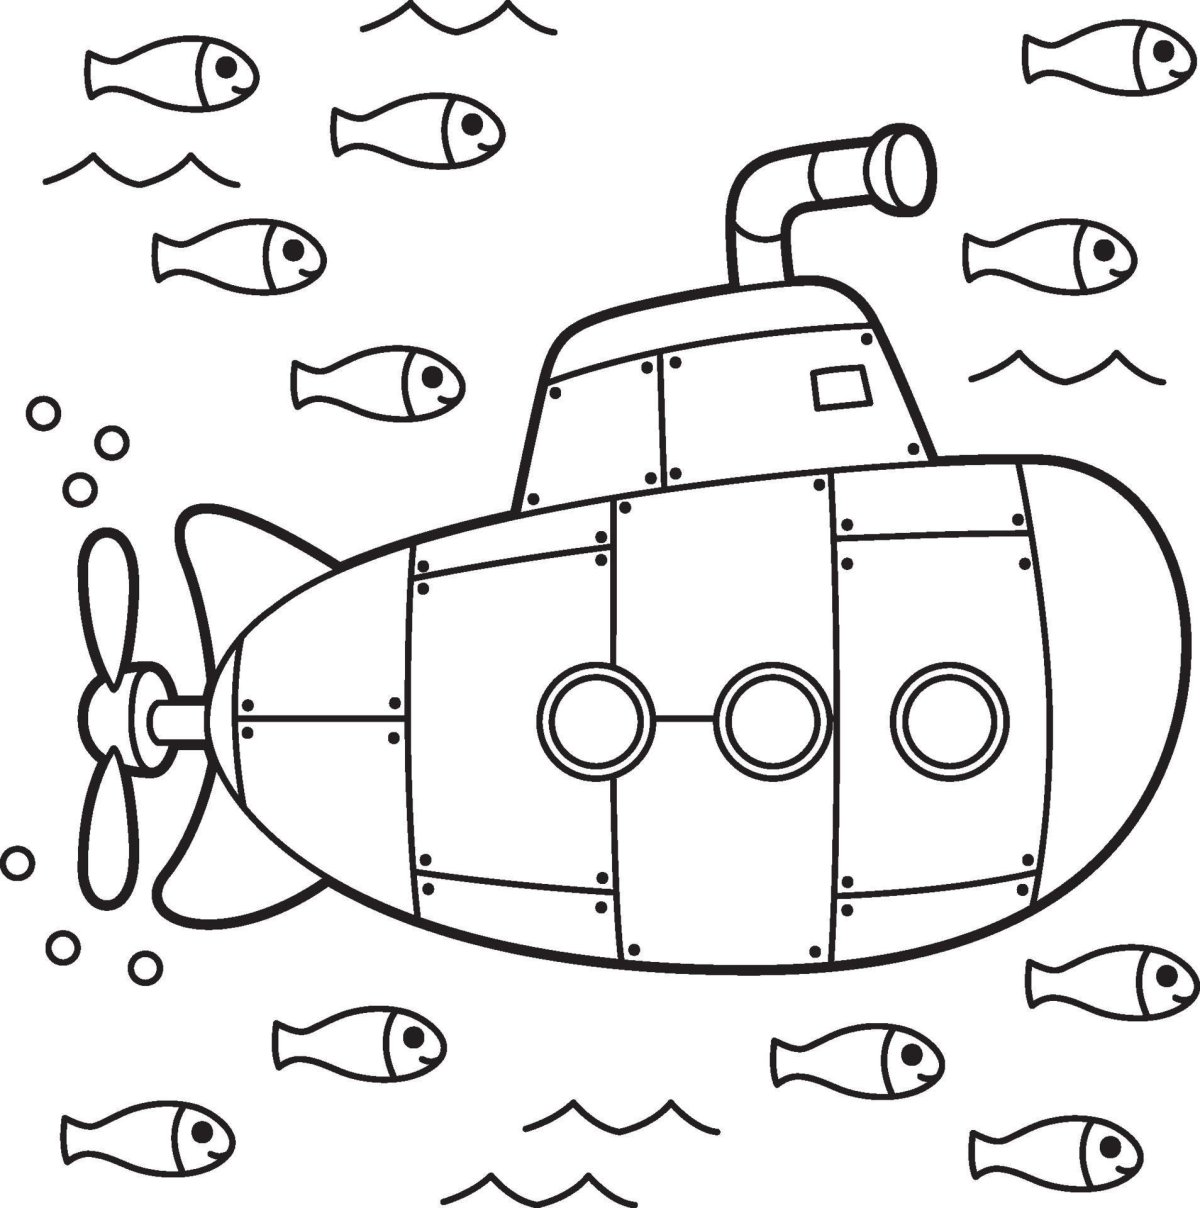 Submarine for children 5 6 years old #4